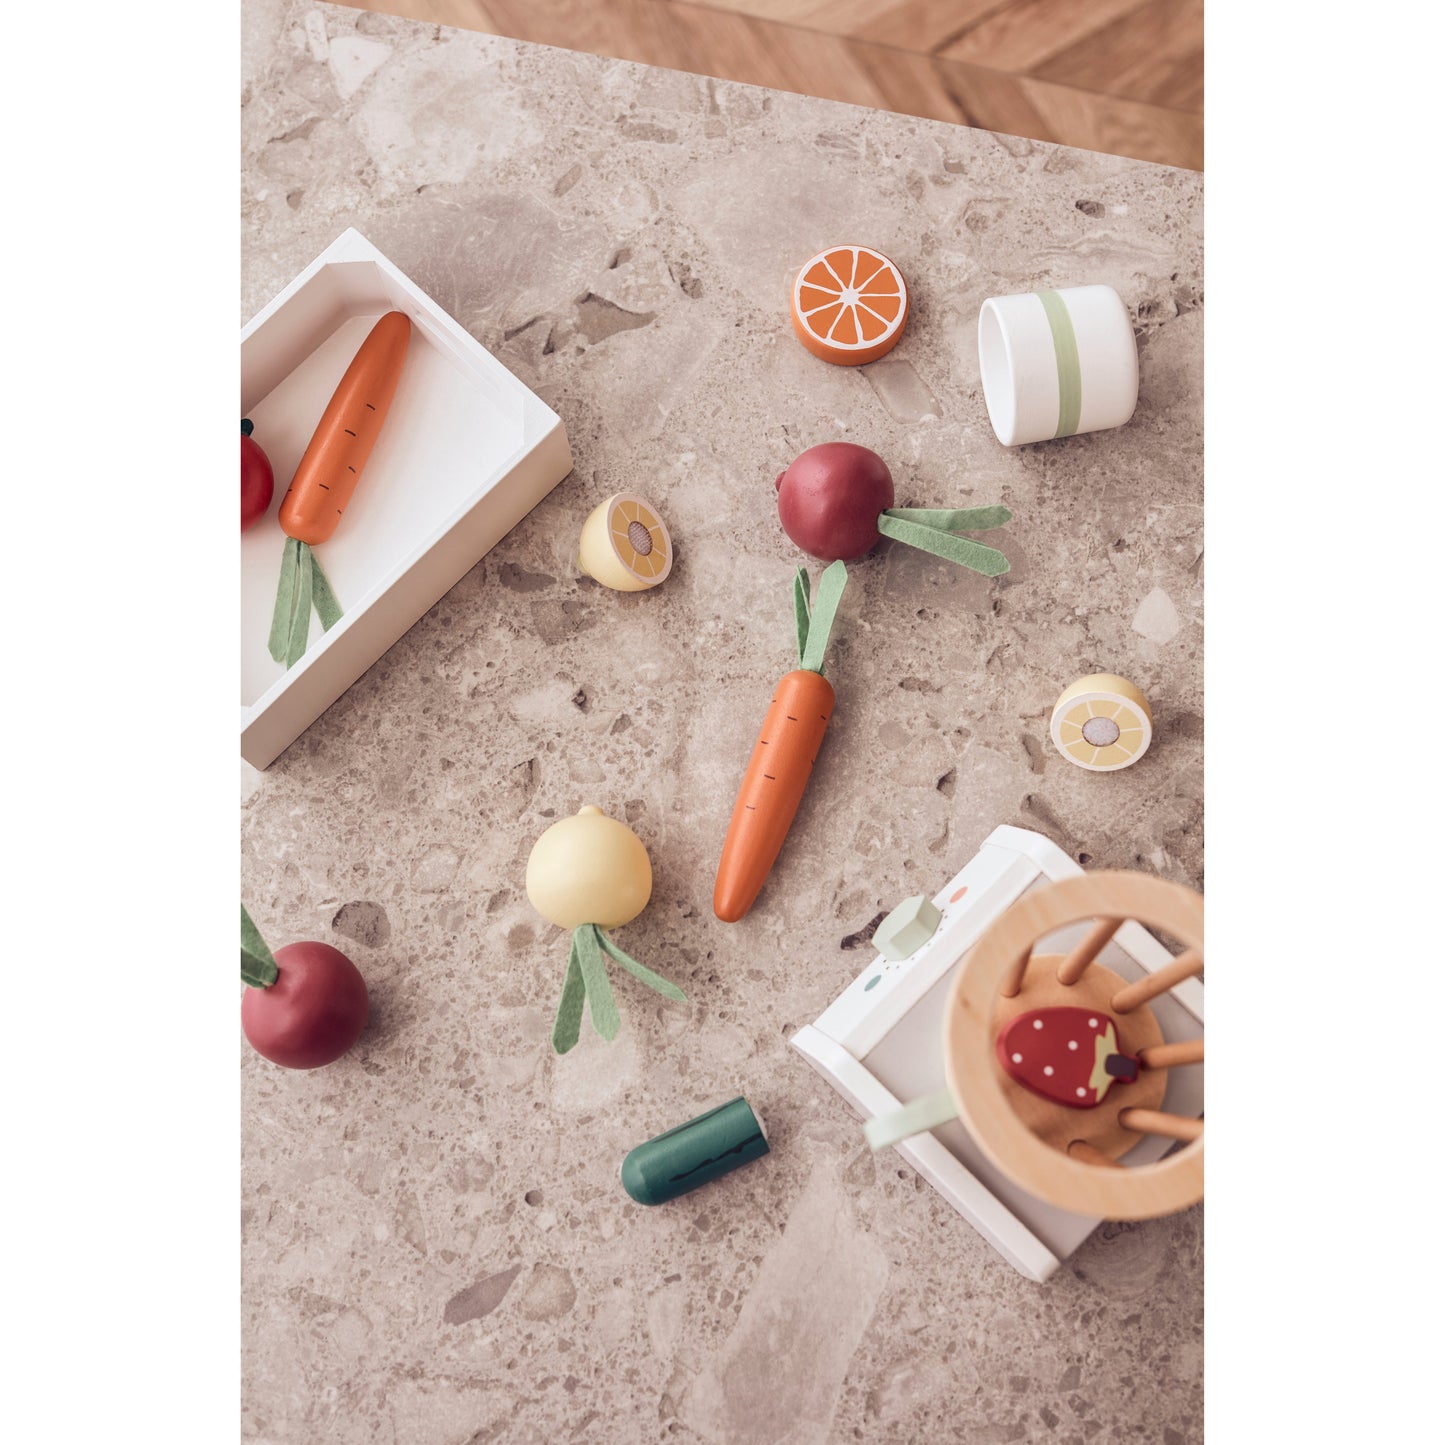 Mixed toy vegetable box/Kutia e perimeve -Kid's Concept